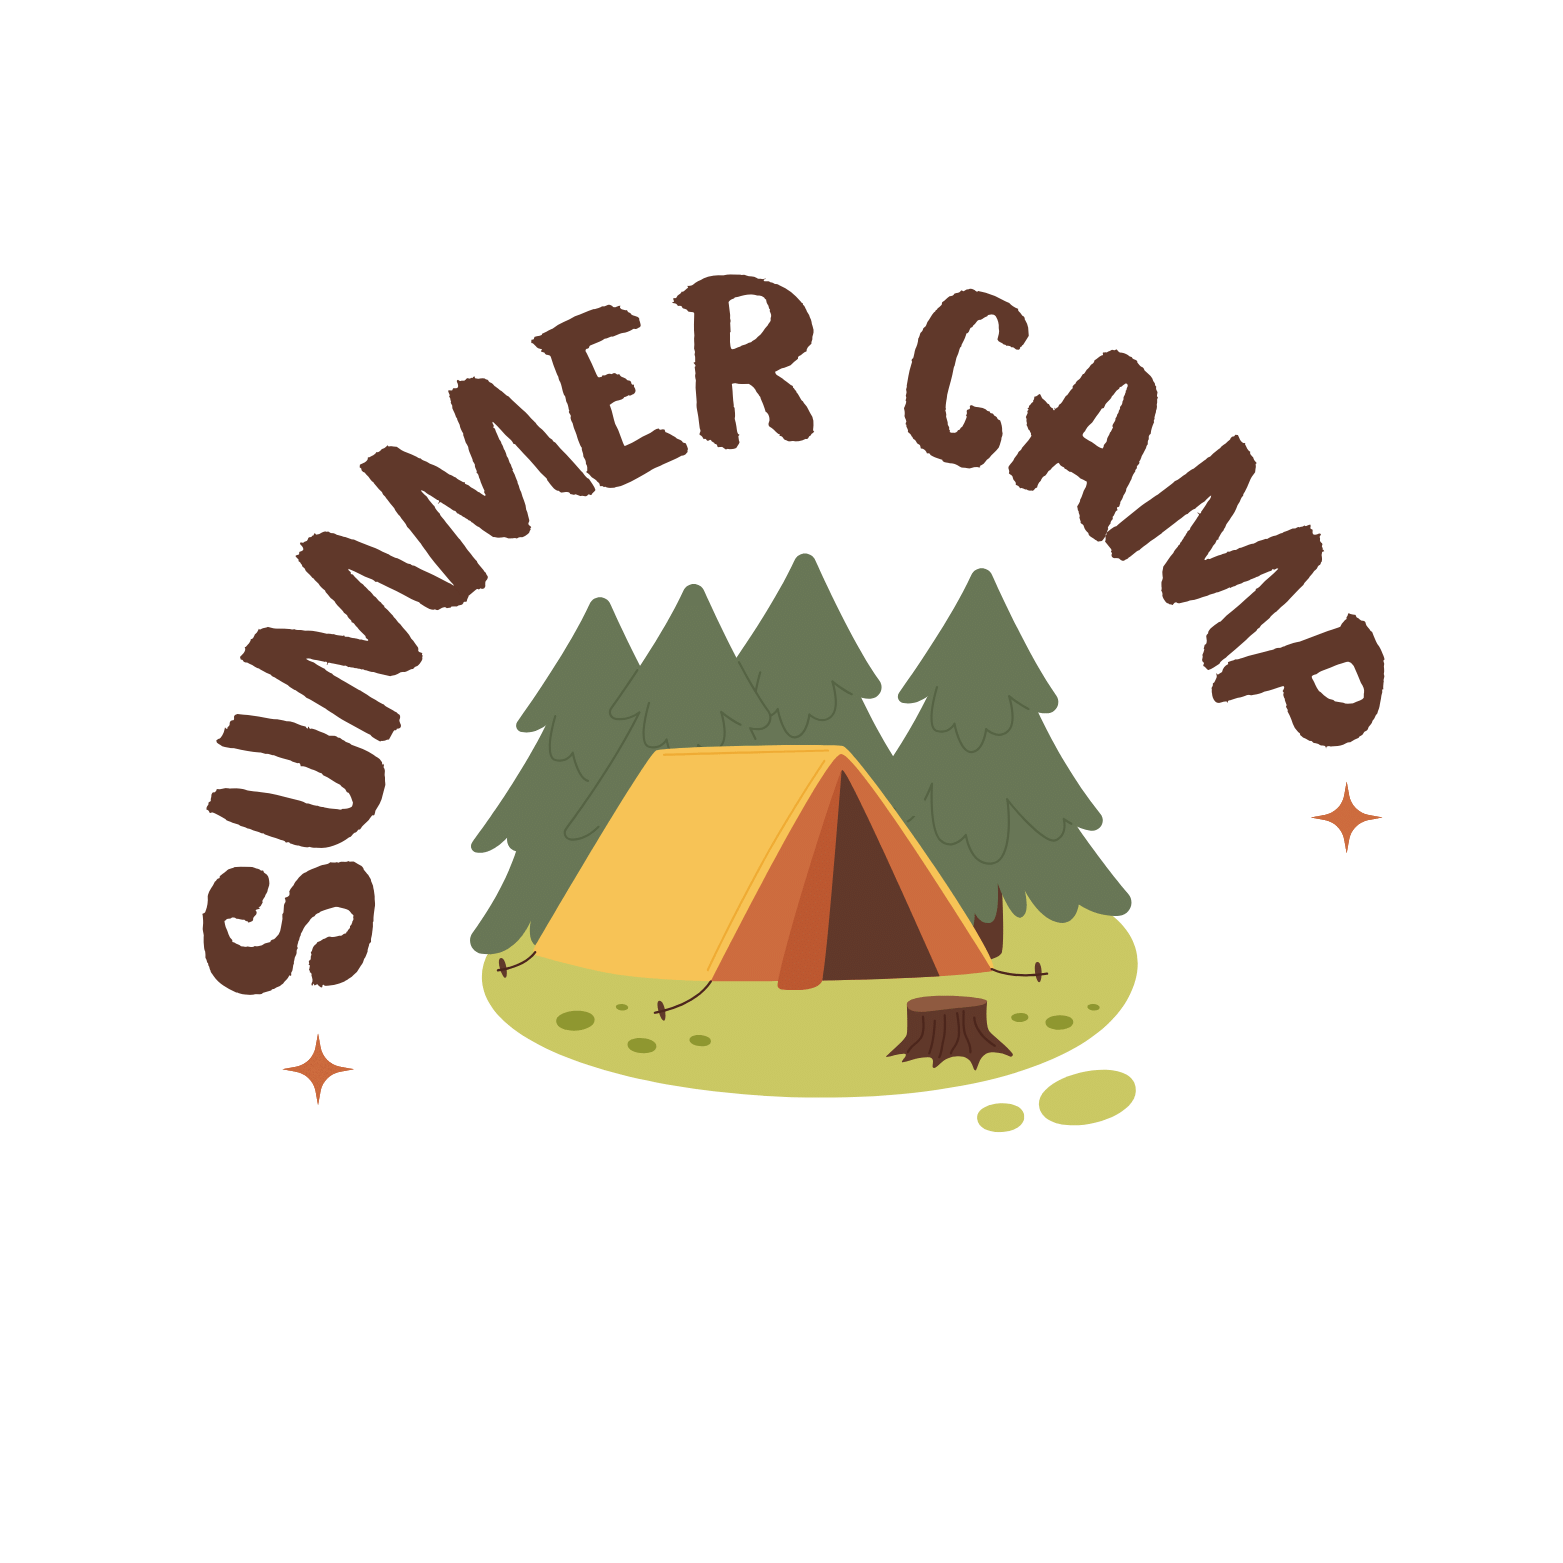 5 Summer Camp Logos Bundle cover image.